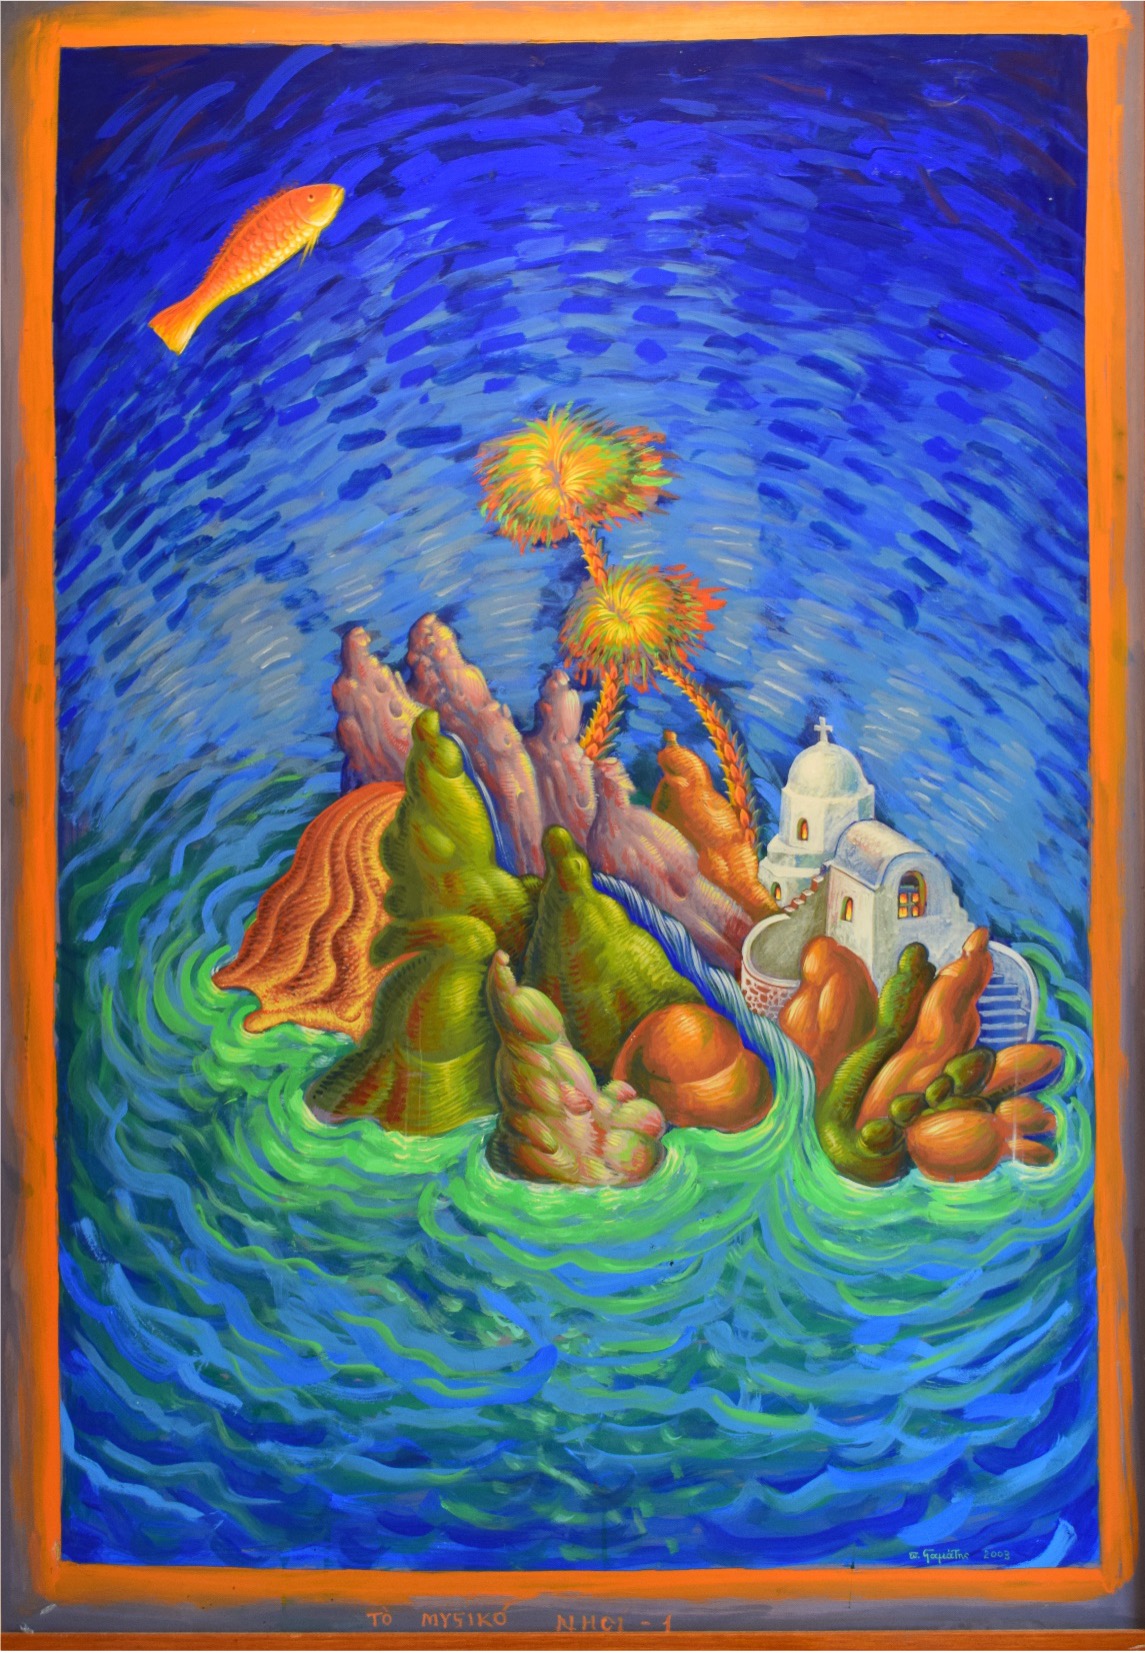 “Mystical Island”, acrylic on canvas, 2003, 65x95 Π132 - Το μυστικό νησί, 2003, ακρυλικό σε μουσαμά, 65*95